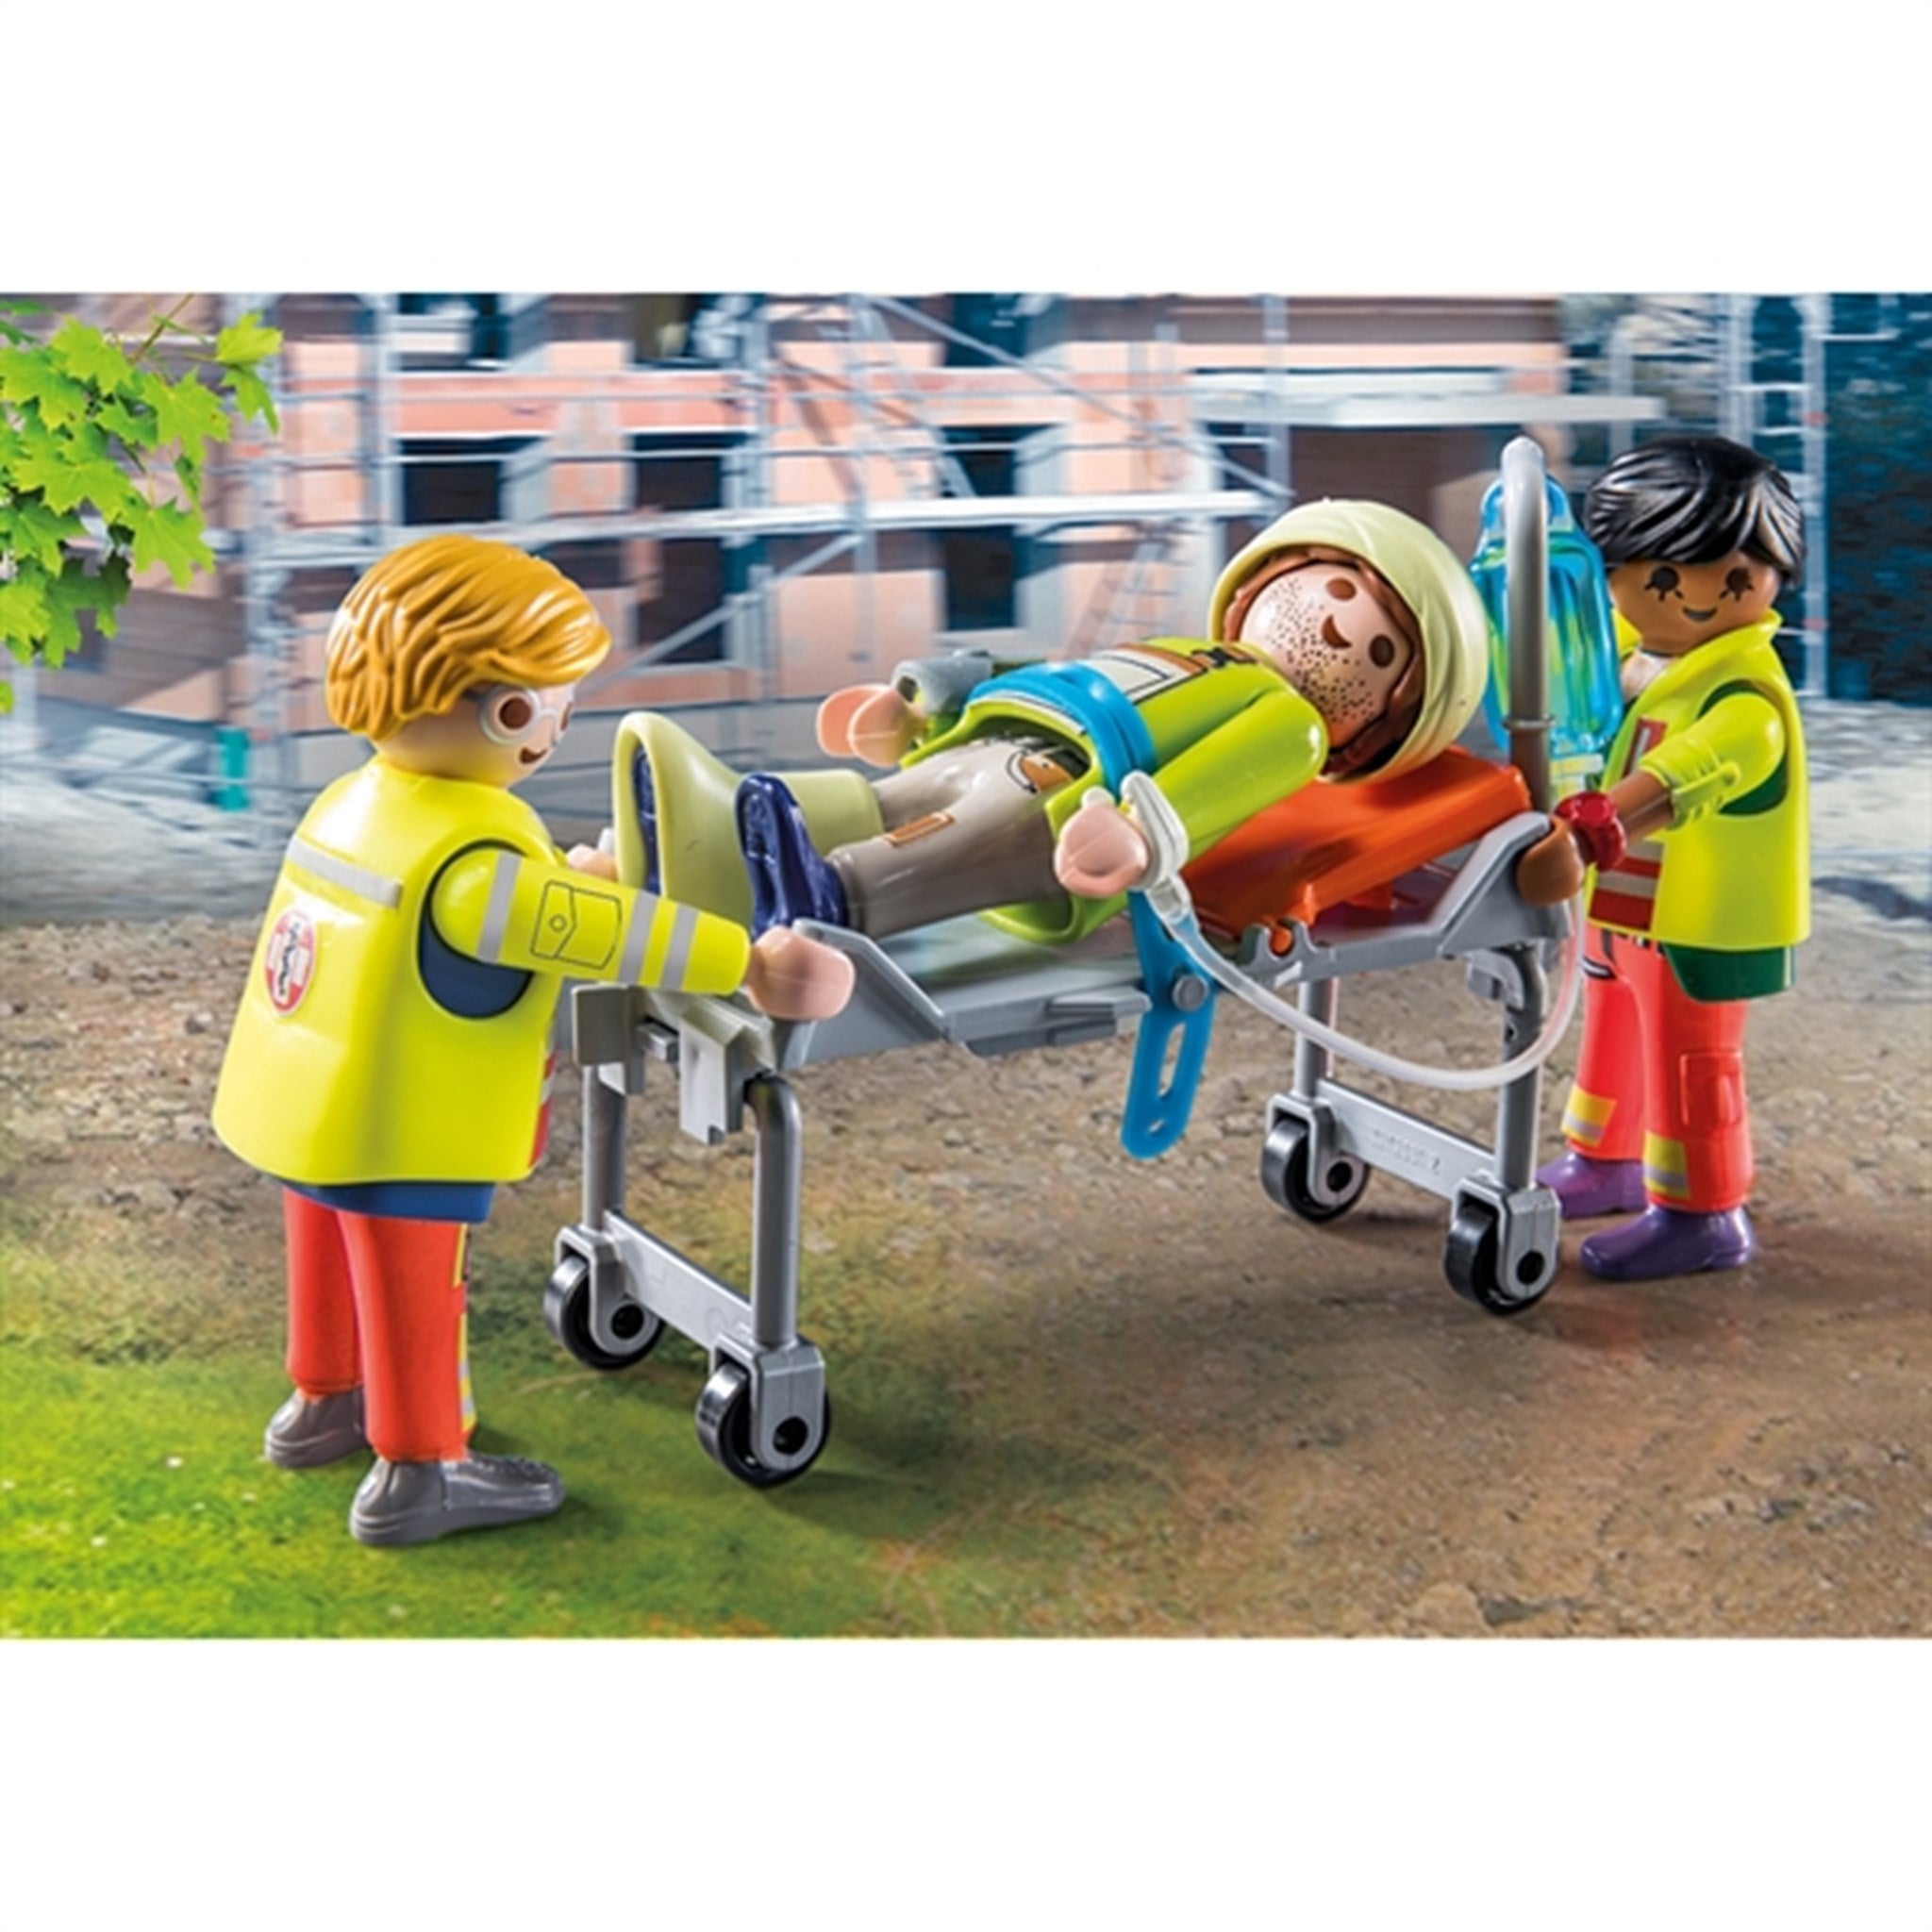 Playmobil® City Life - Ambulance with Light and Sound 5